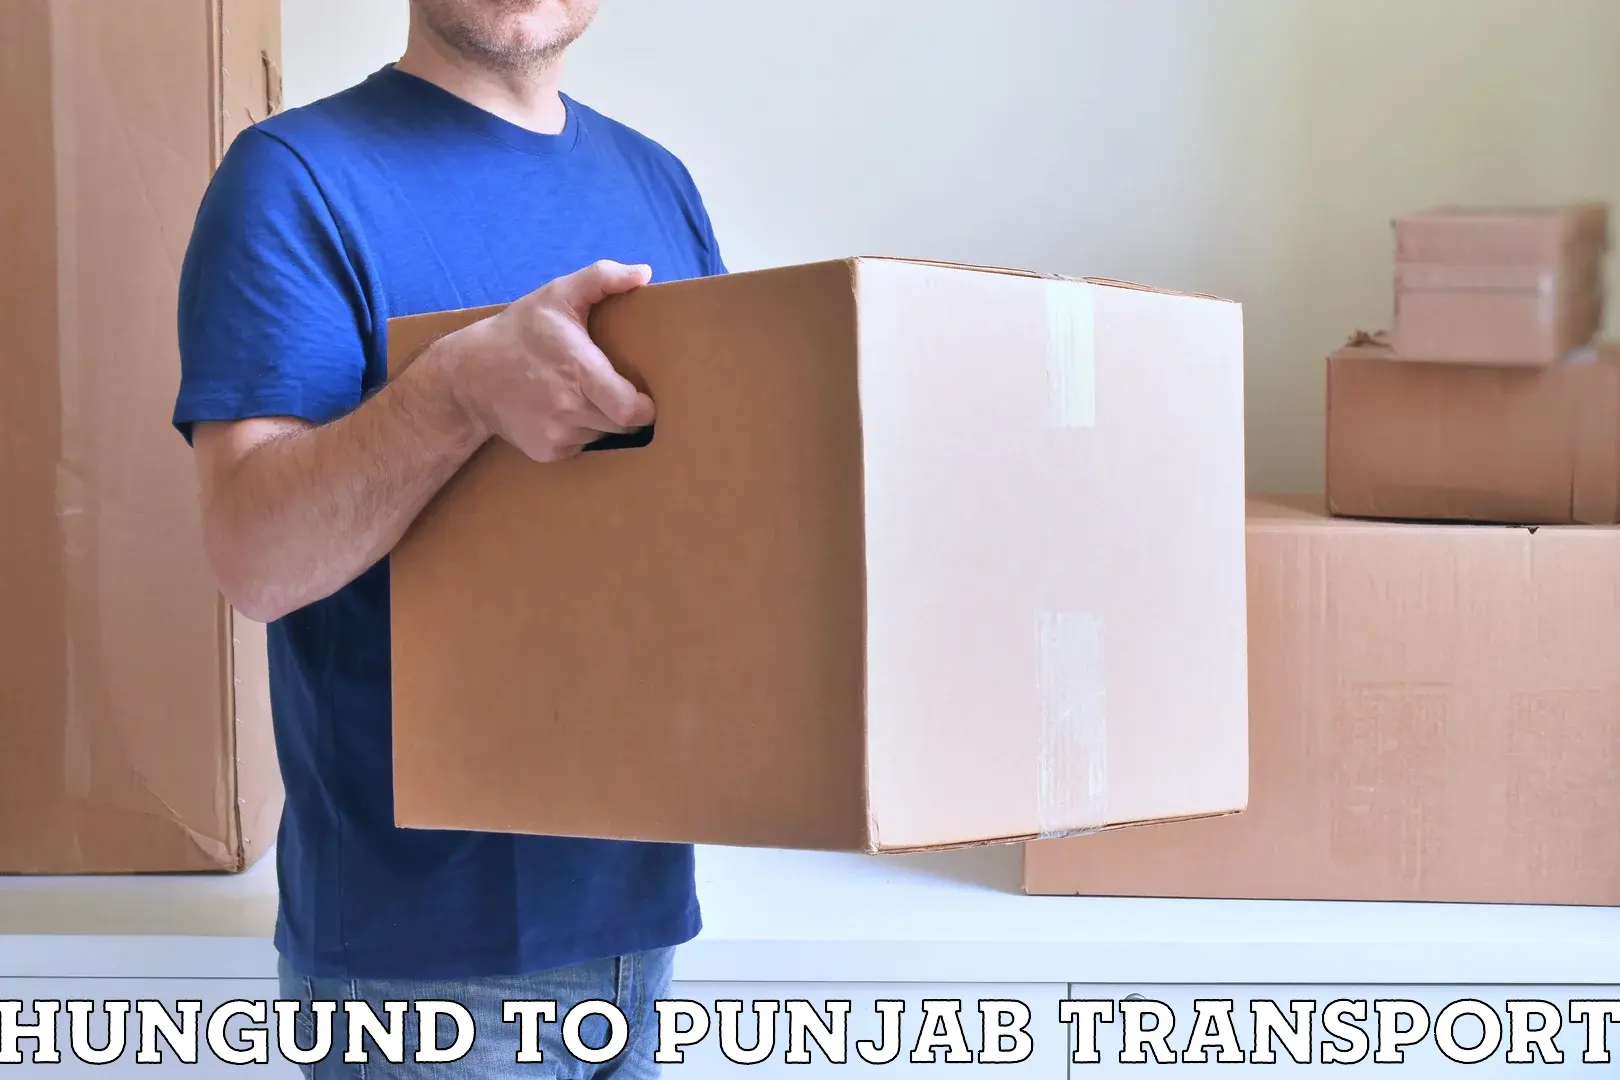 Daily transport service Hungund to Punjab